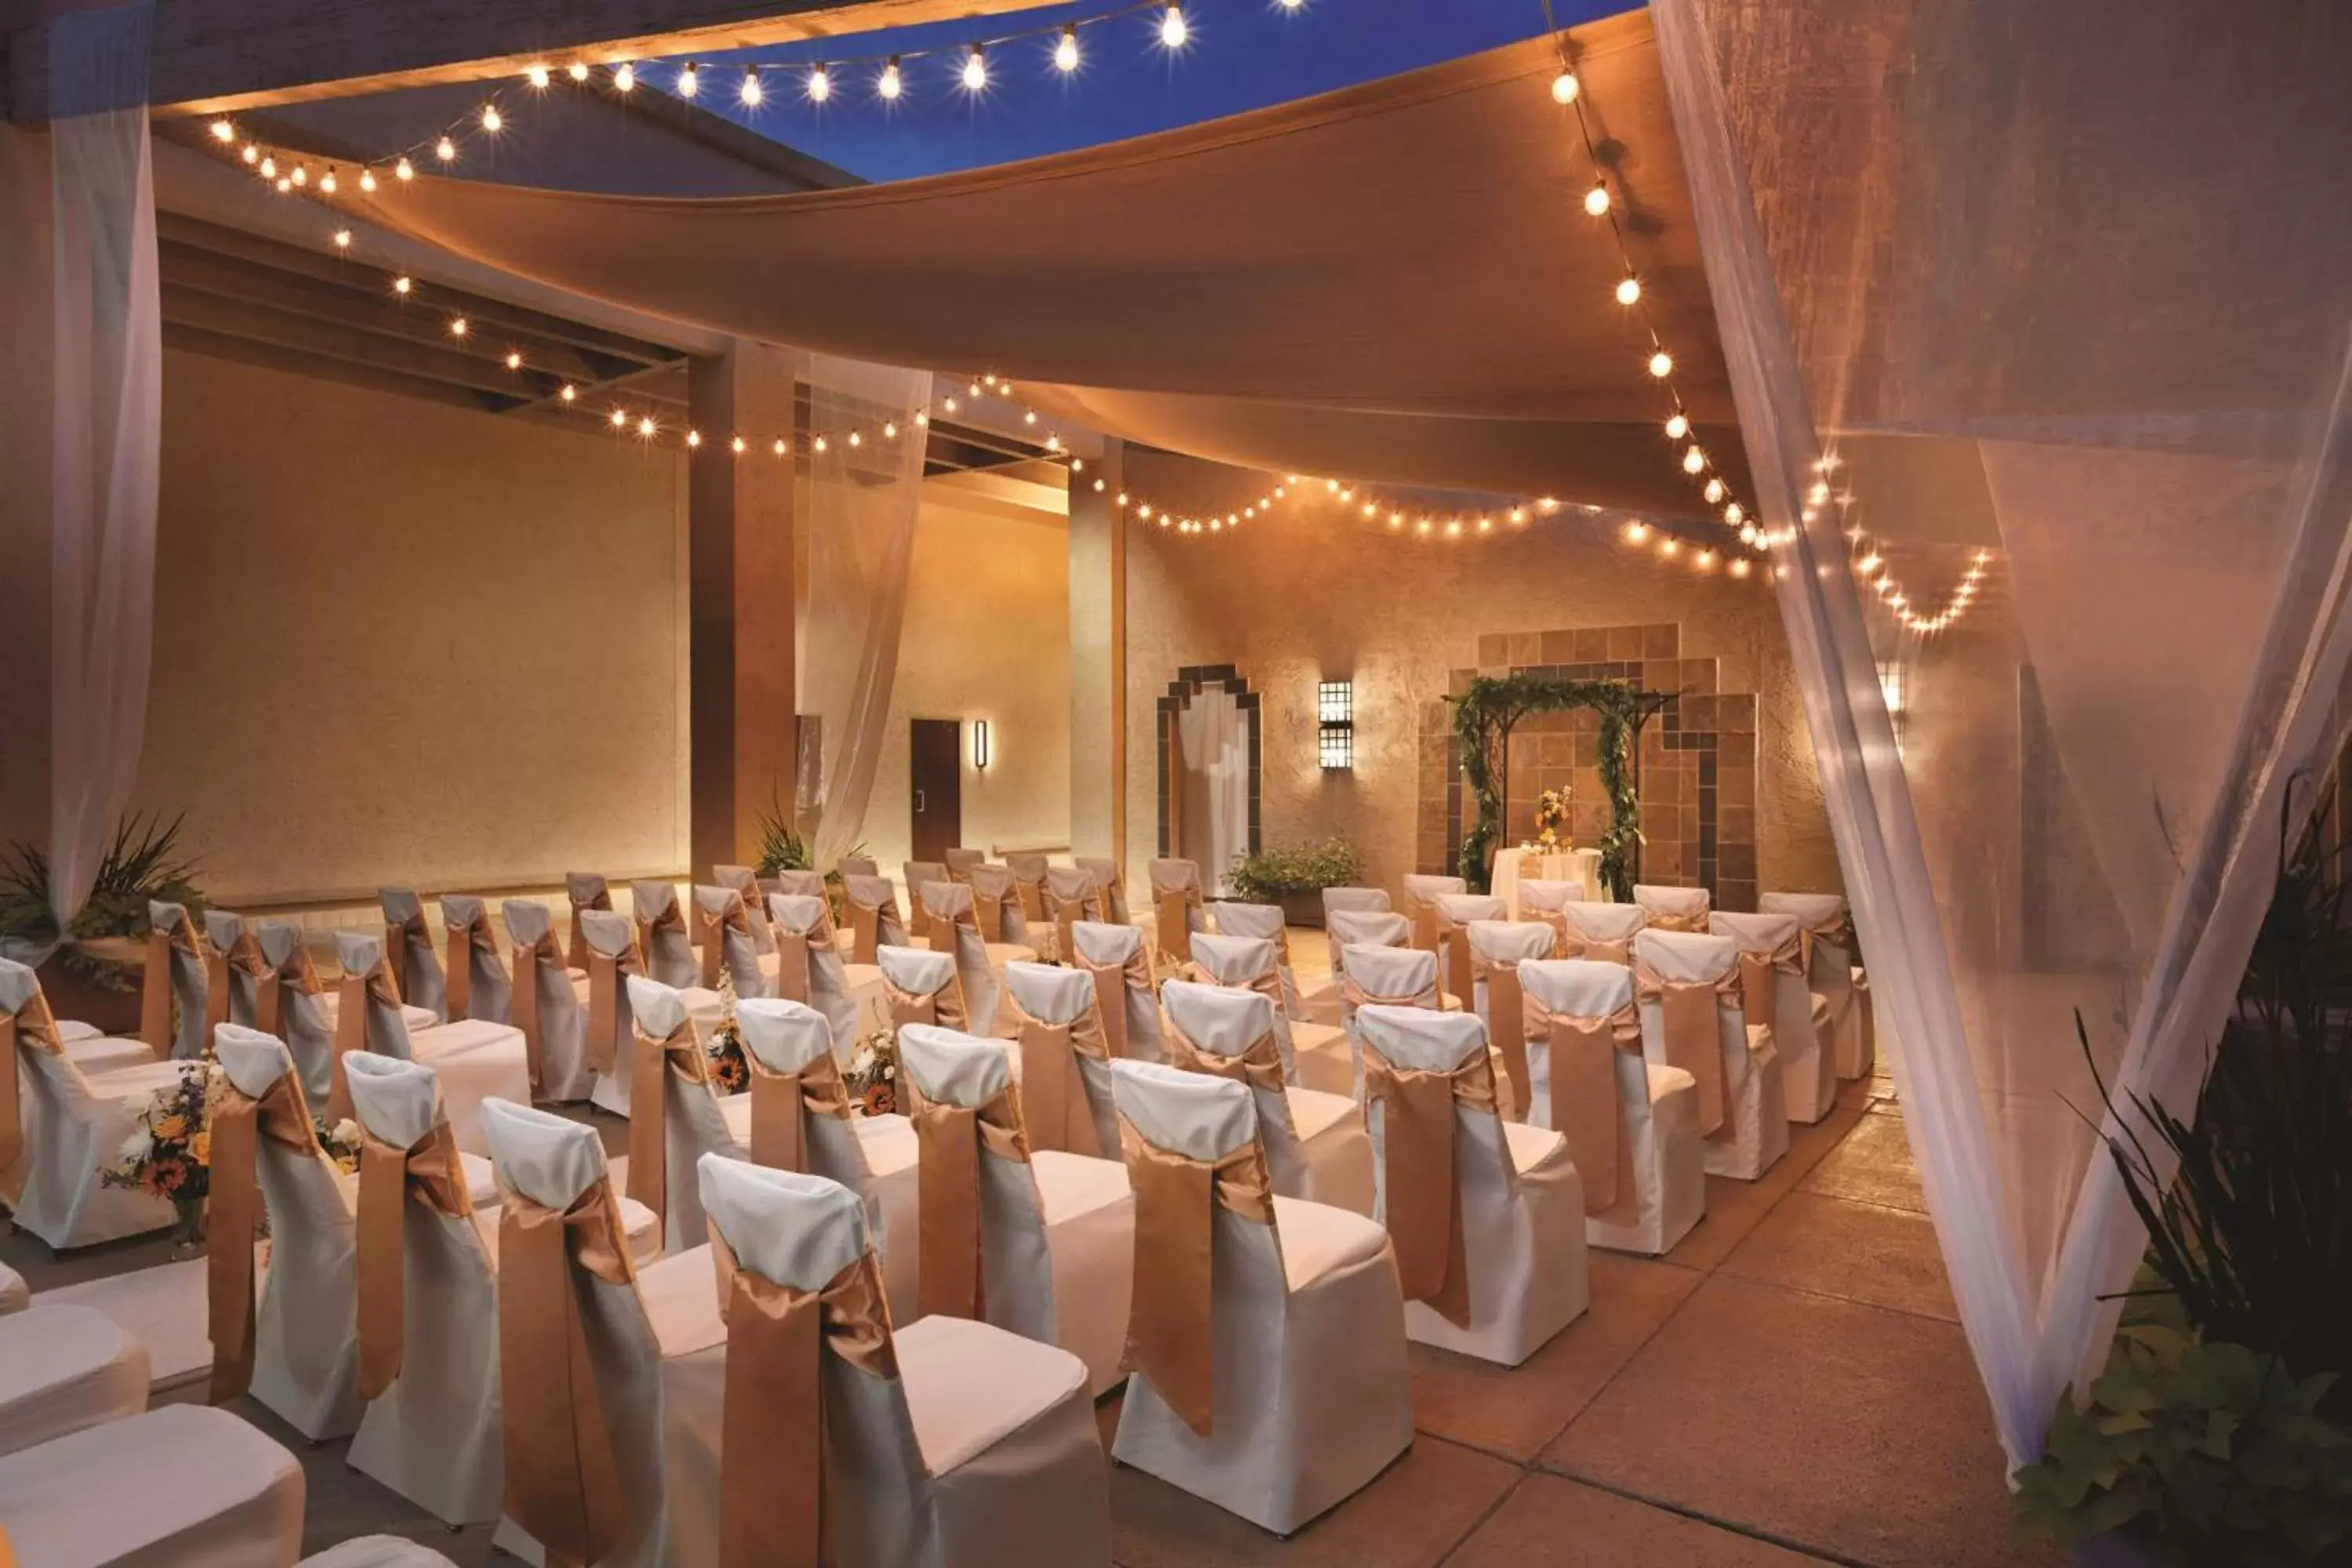 Meeting/conference room, Banquet Facilities in Hilton Scottsdale Resort & Villas